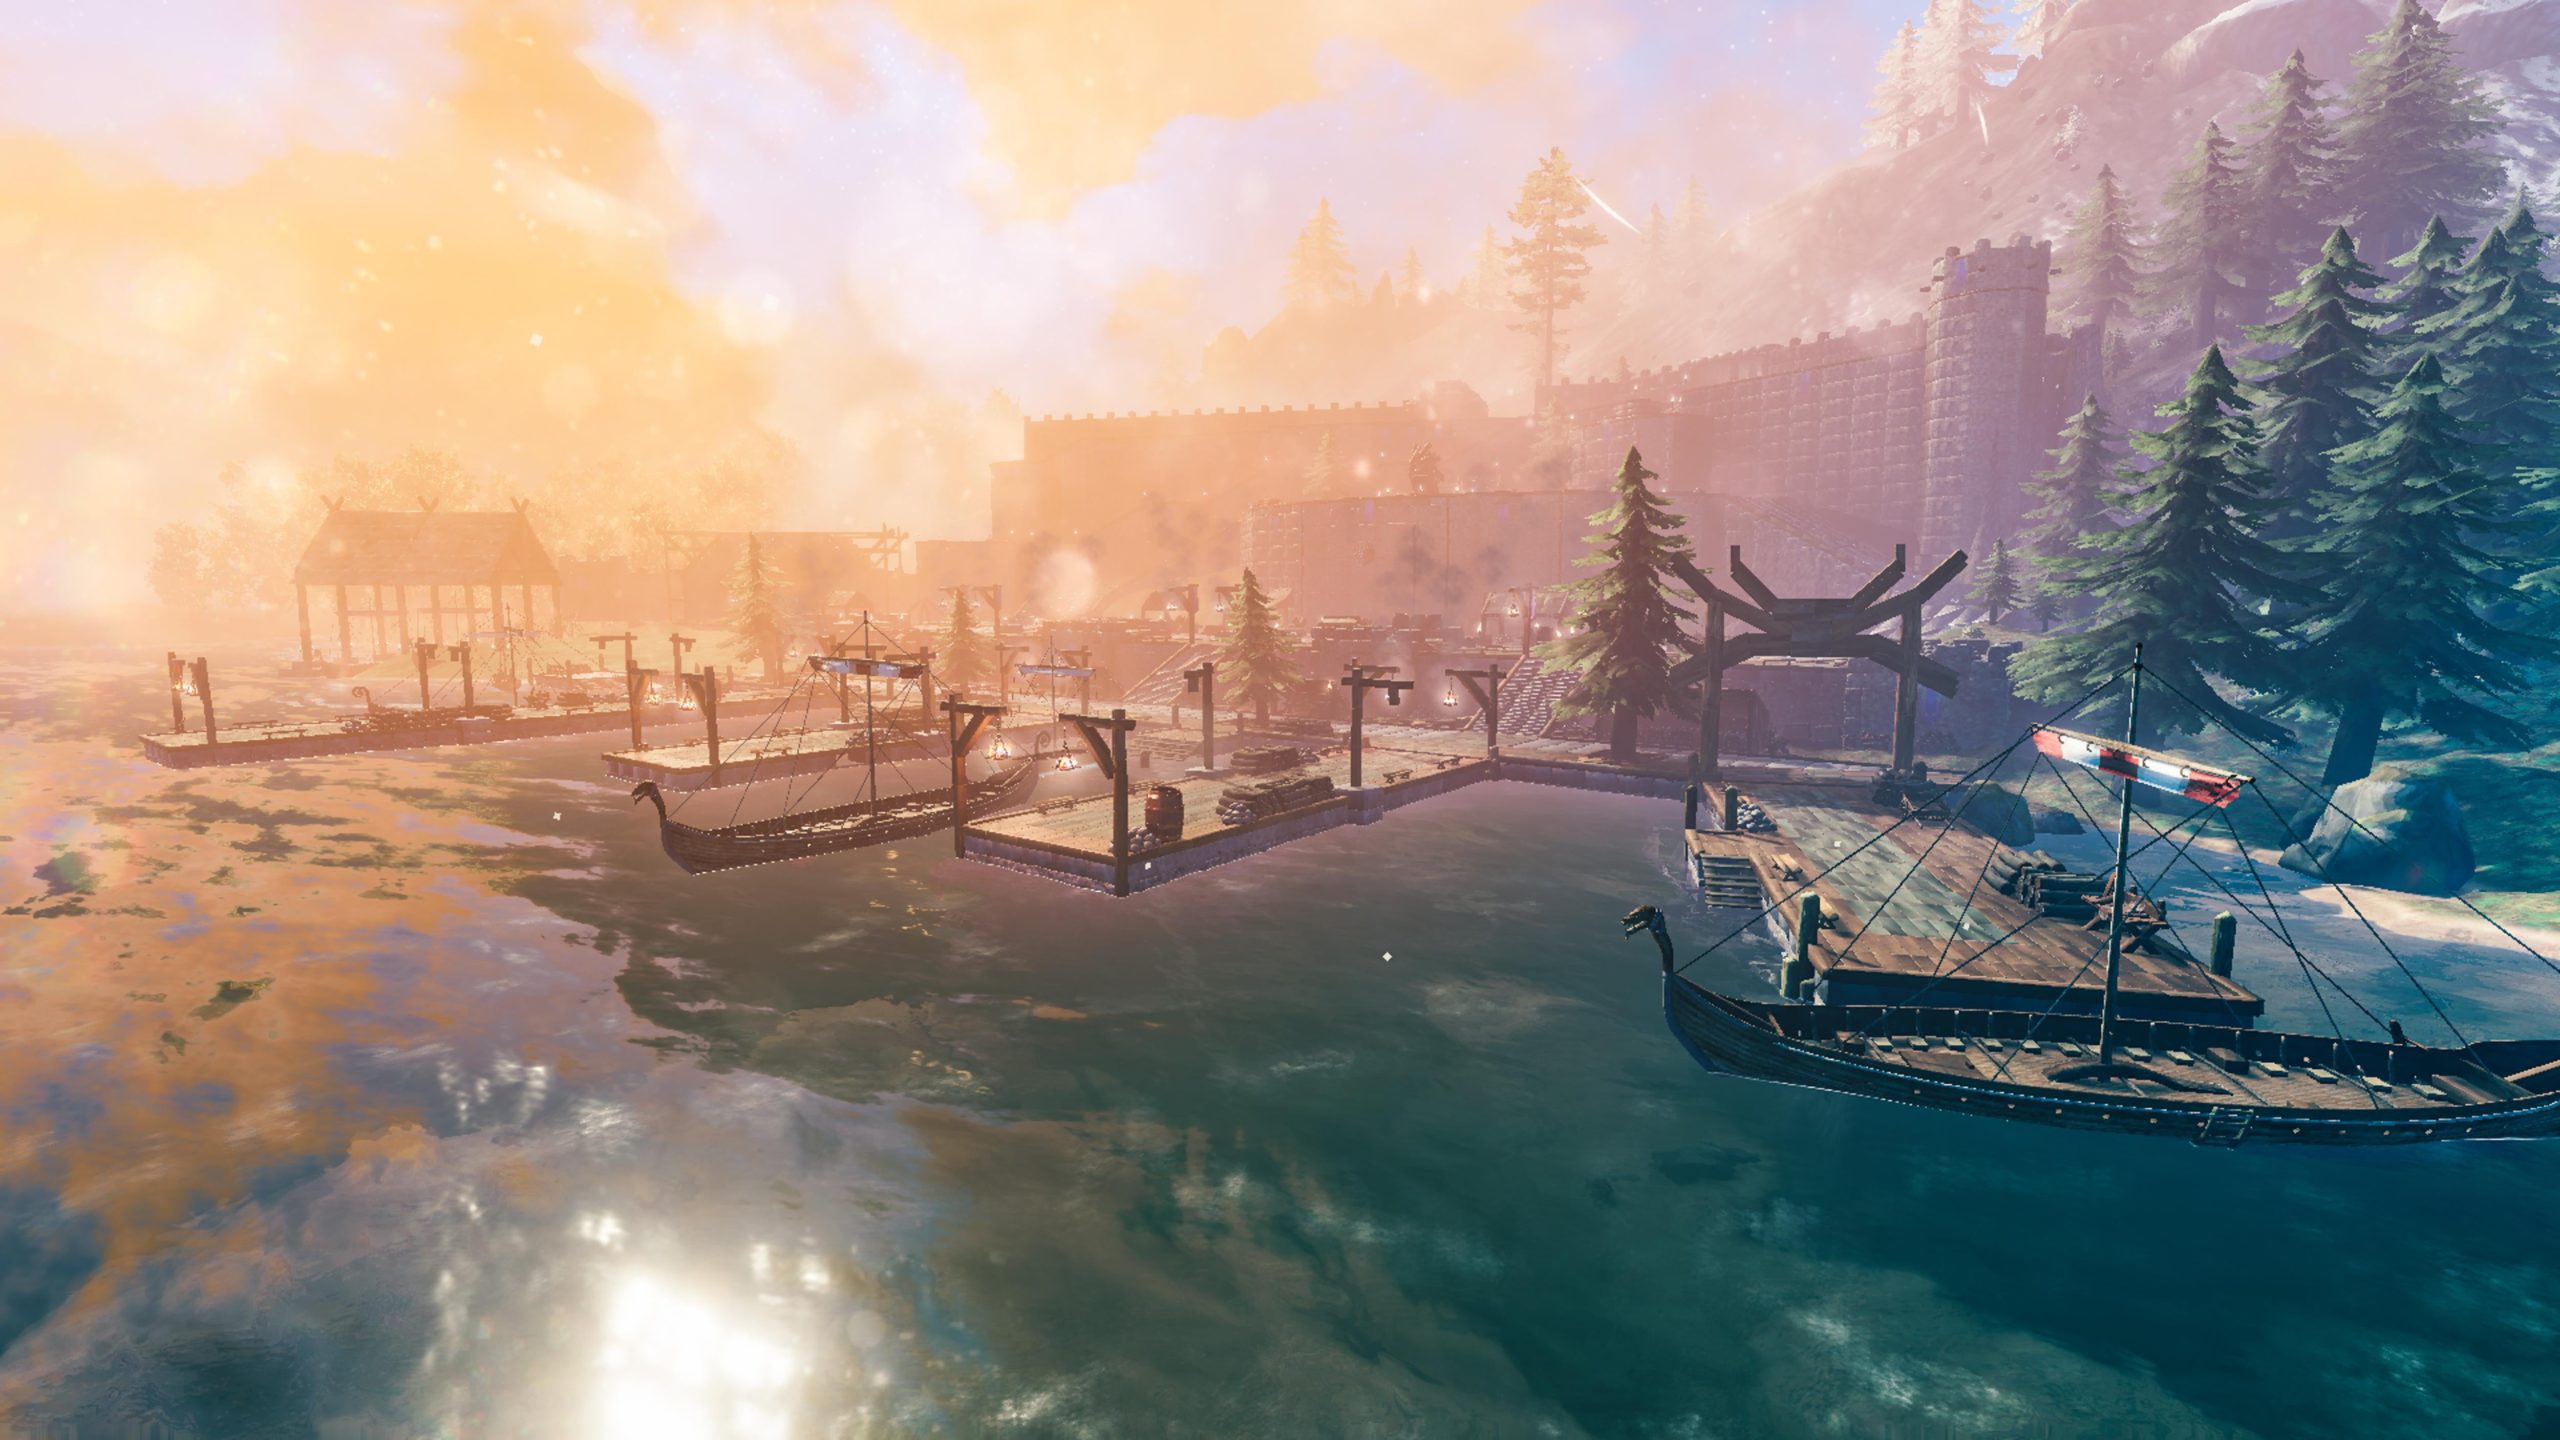 Player recreates Stormwind Harbor from World of Warcraft in Valheim